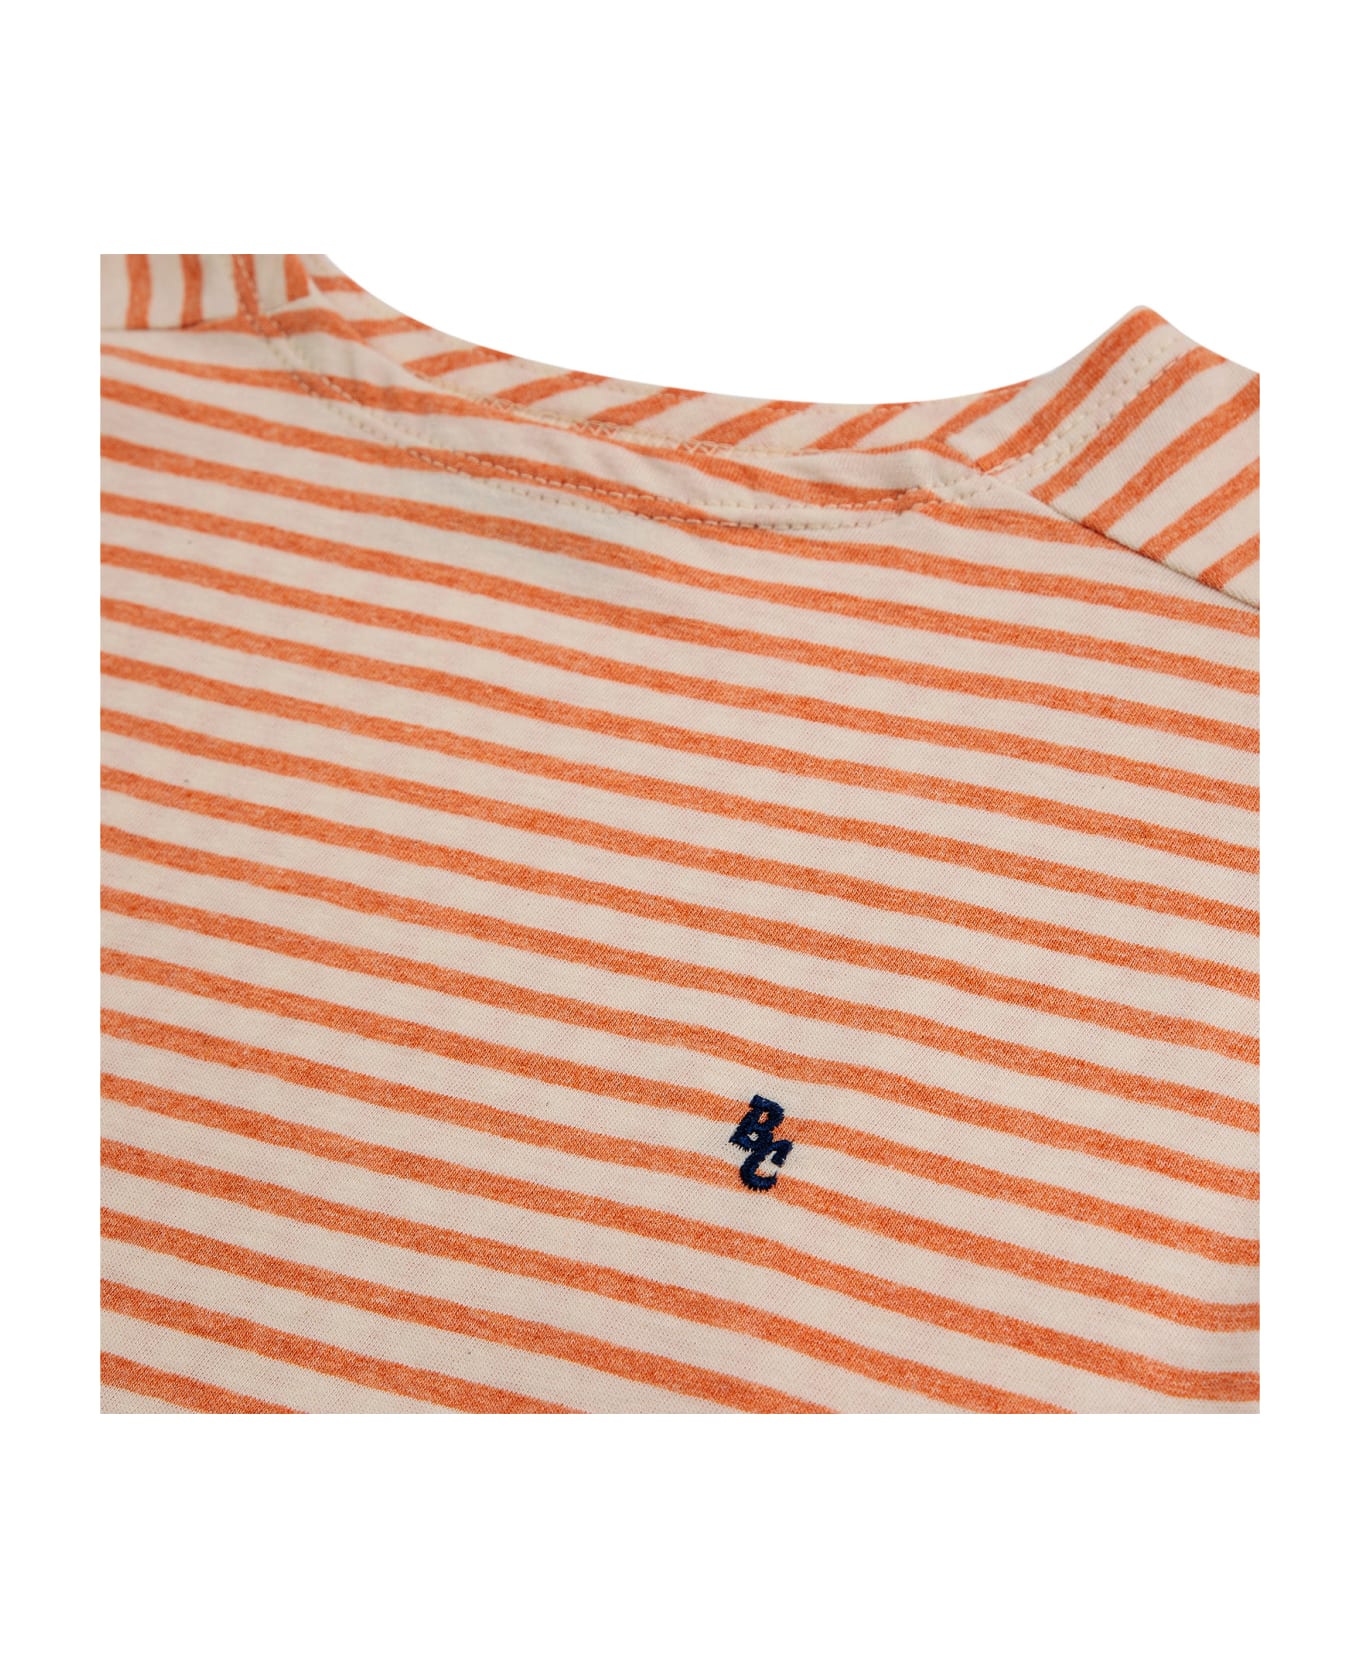 Bobo Choses Orange T-shirt For Kids With Stripes - Orange